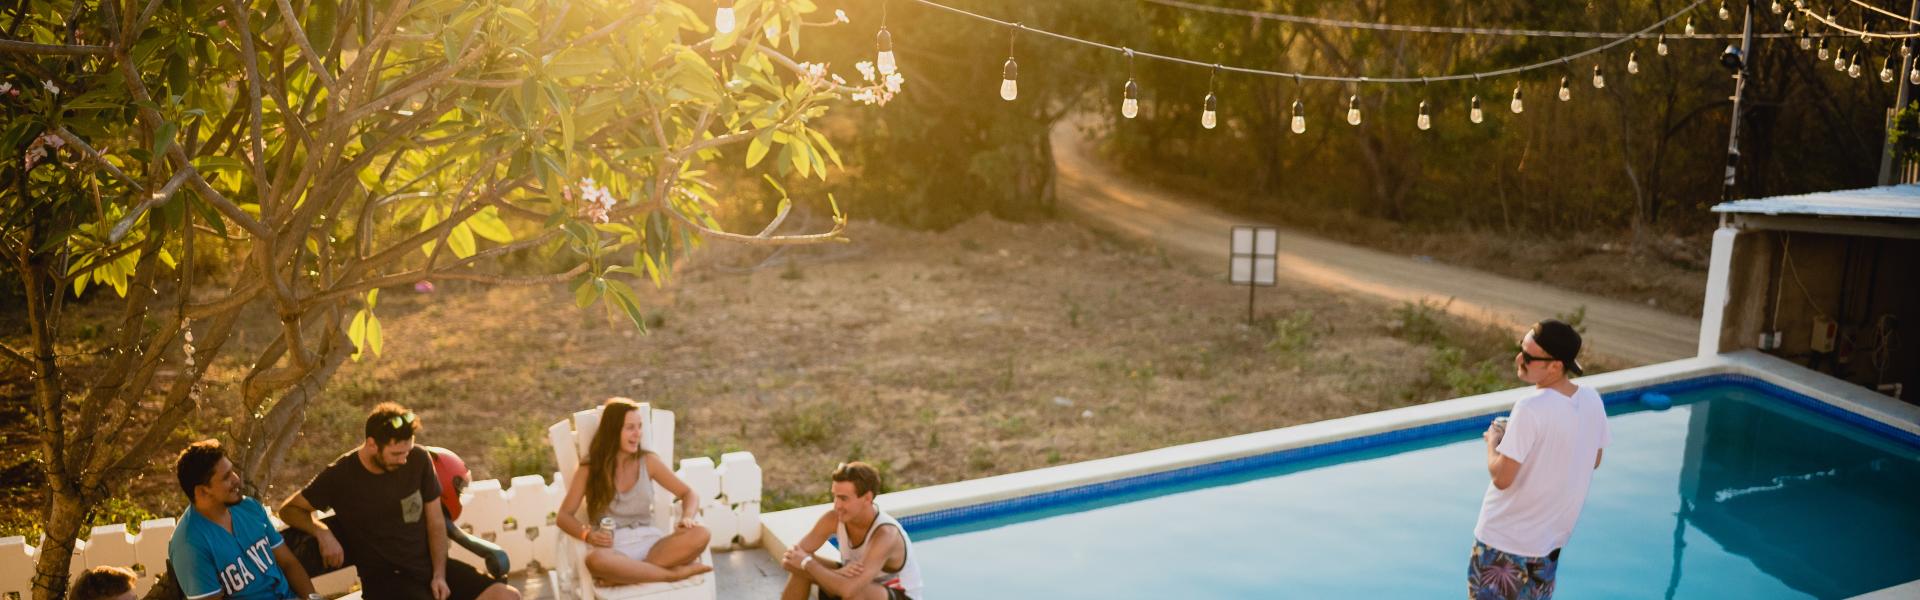 Ferienhaus mit Pool in Montenegro - Casamundo